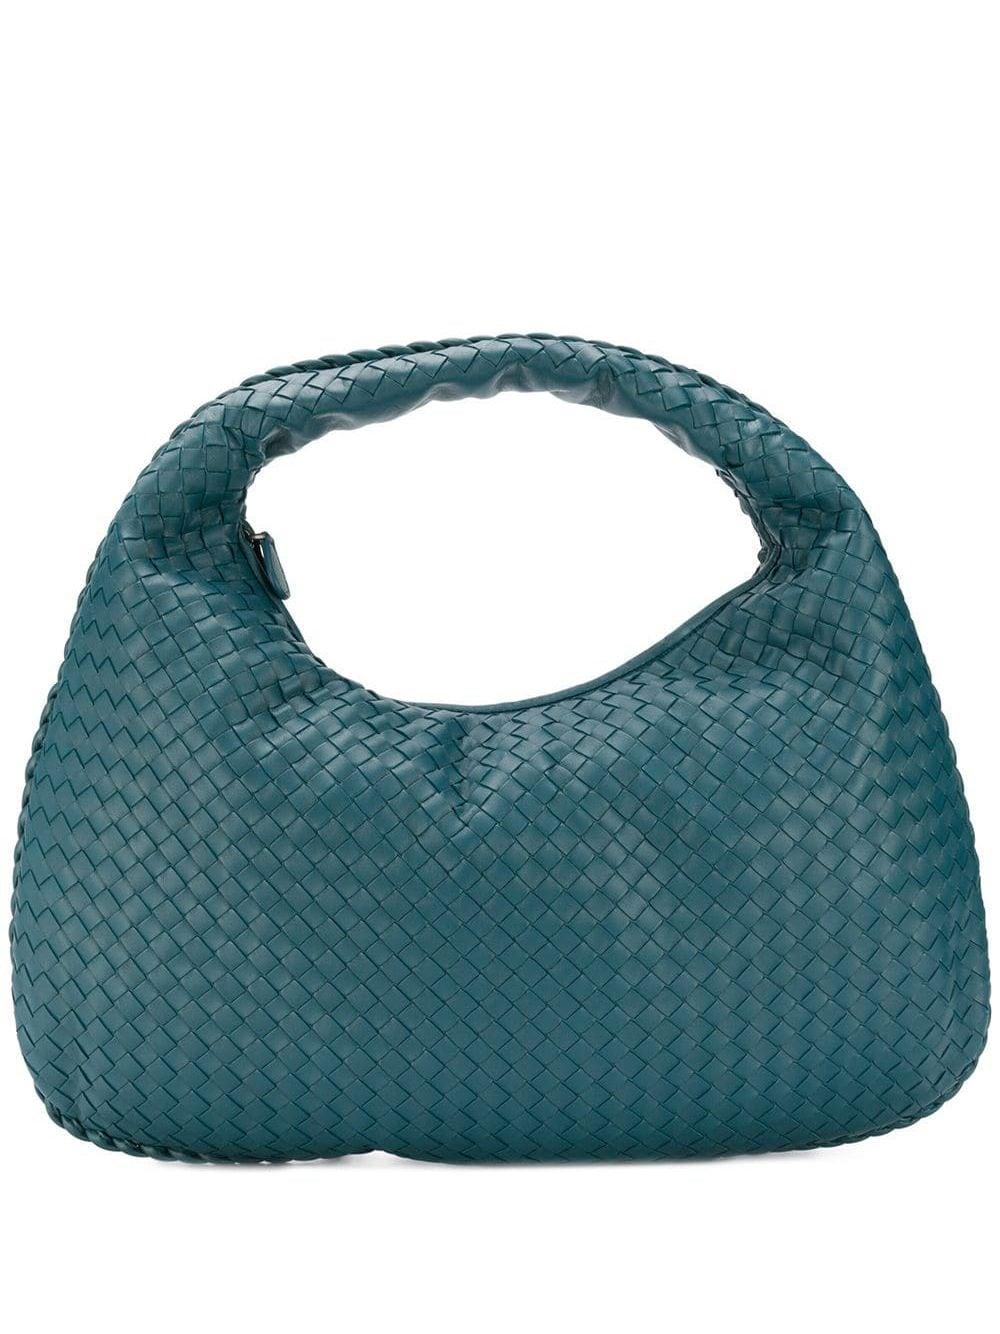 Bottega Veneta Large Veneta Hobo Bag in Blue | Lyst